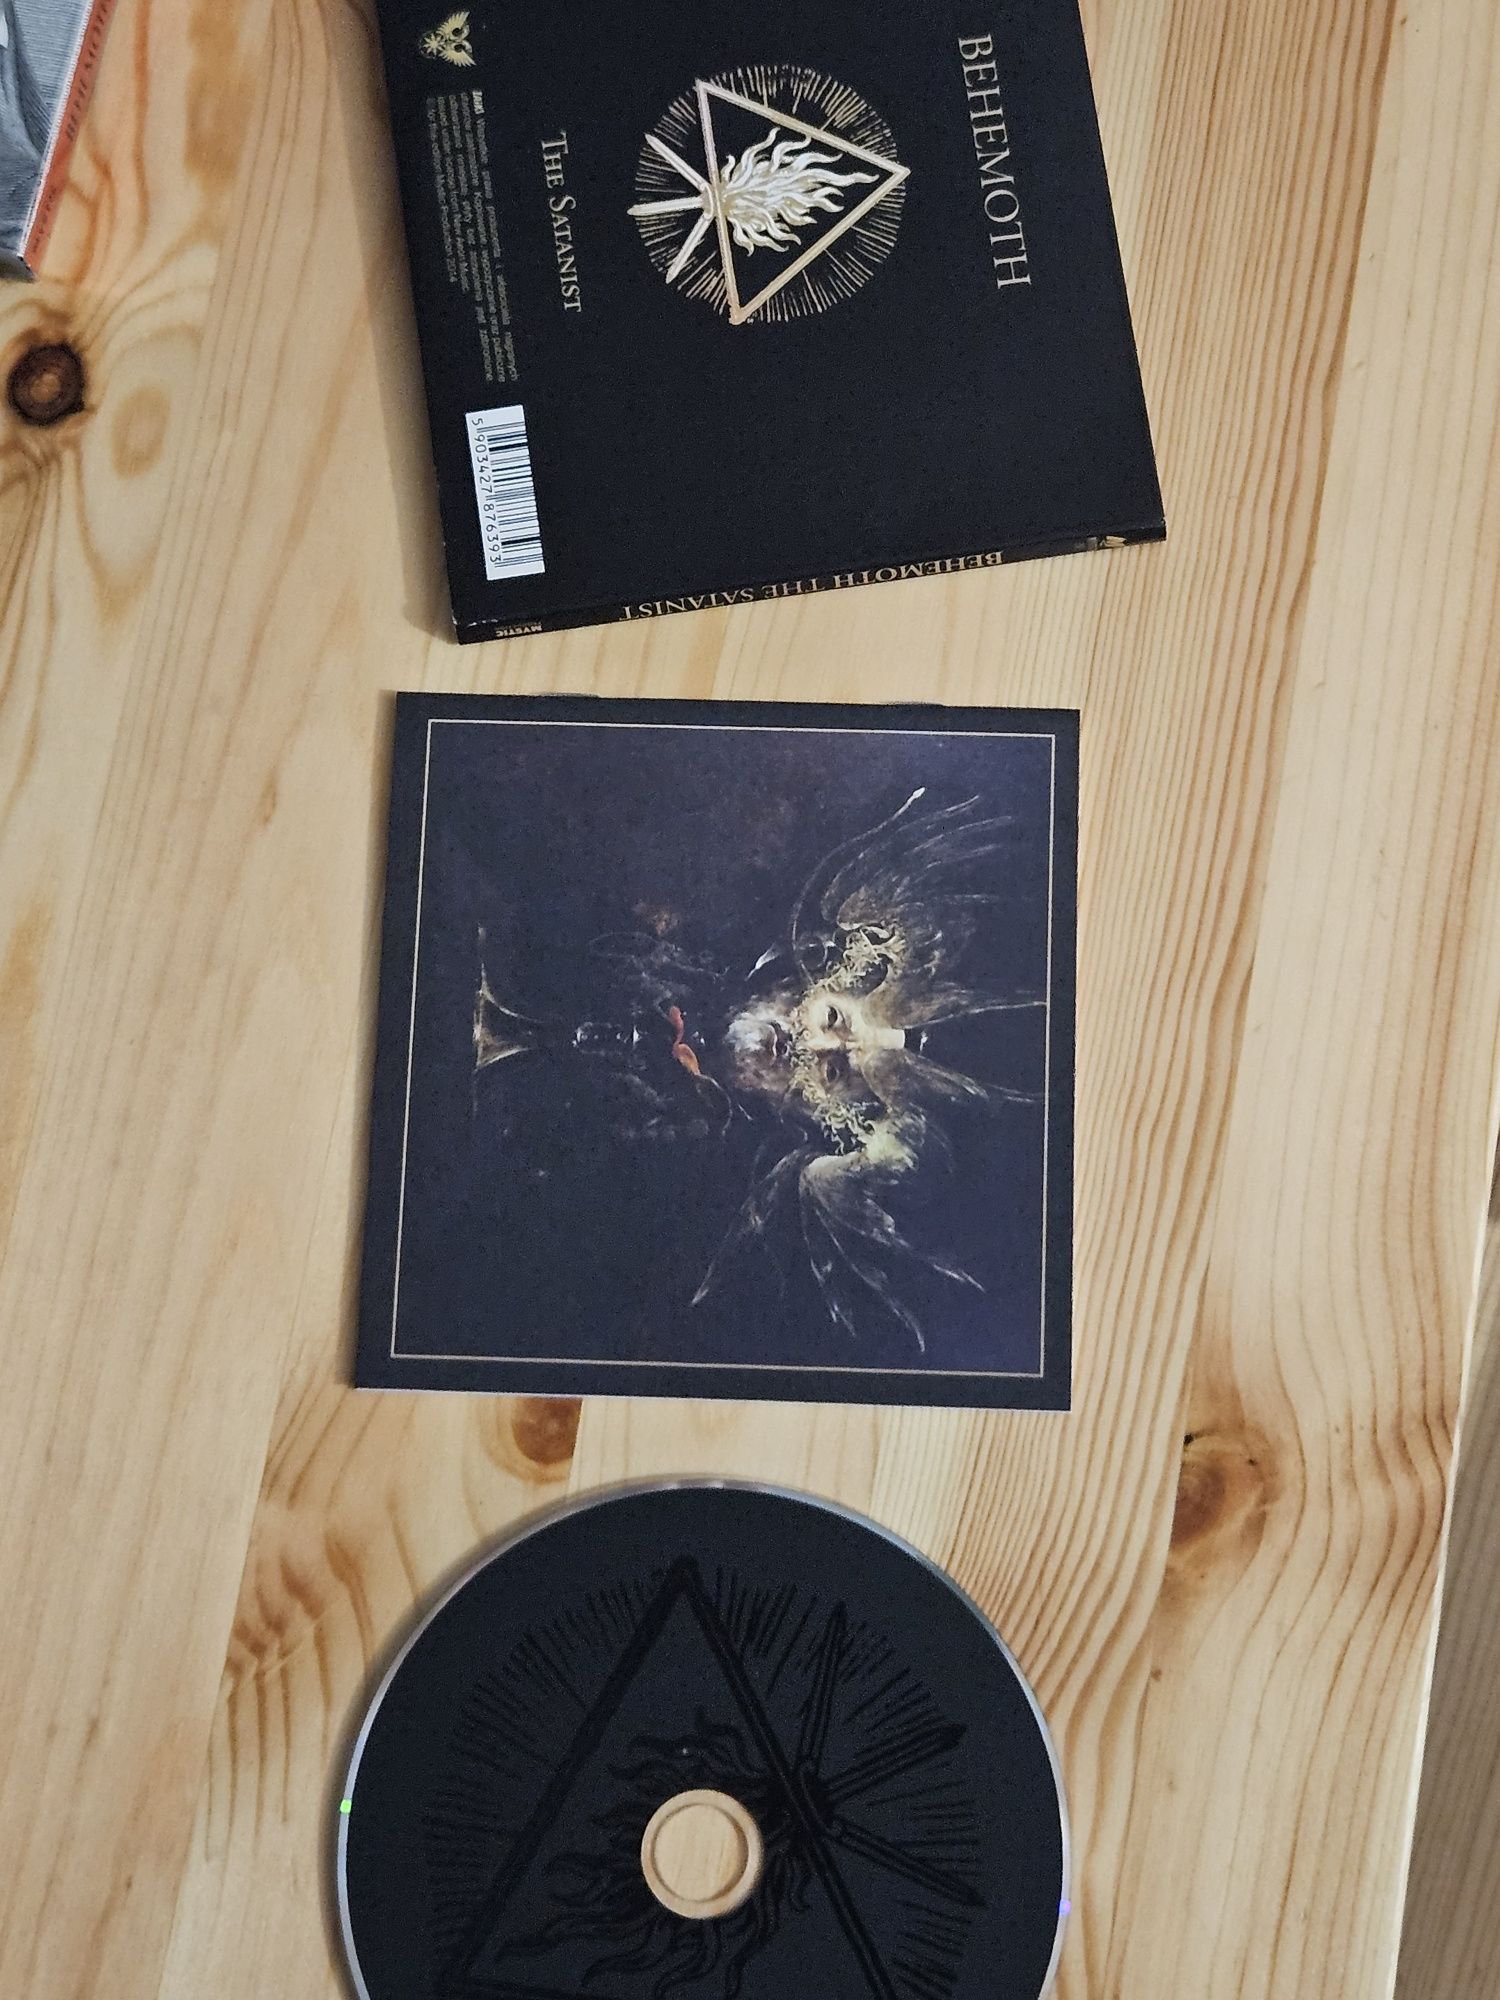 Behemoth - Evangelion (cd&dvd) i The Satanist (digipak)